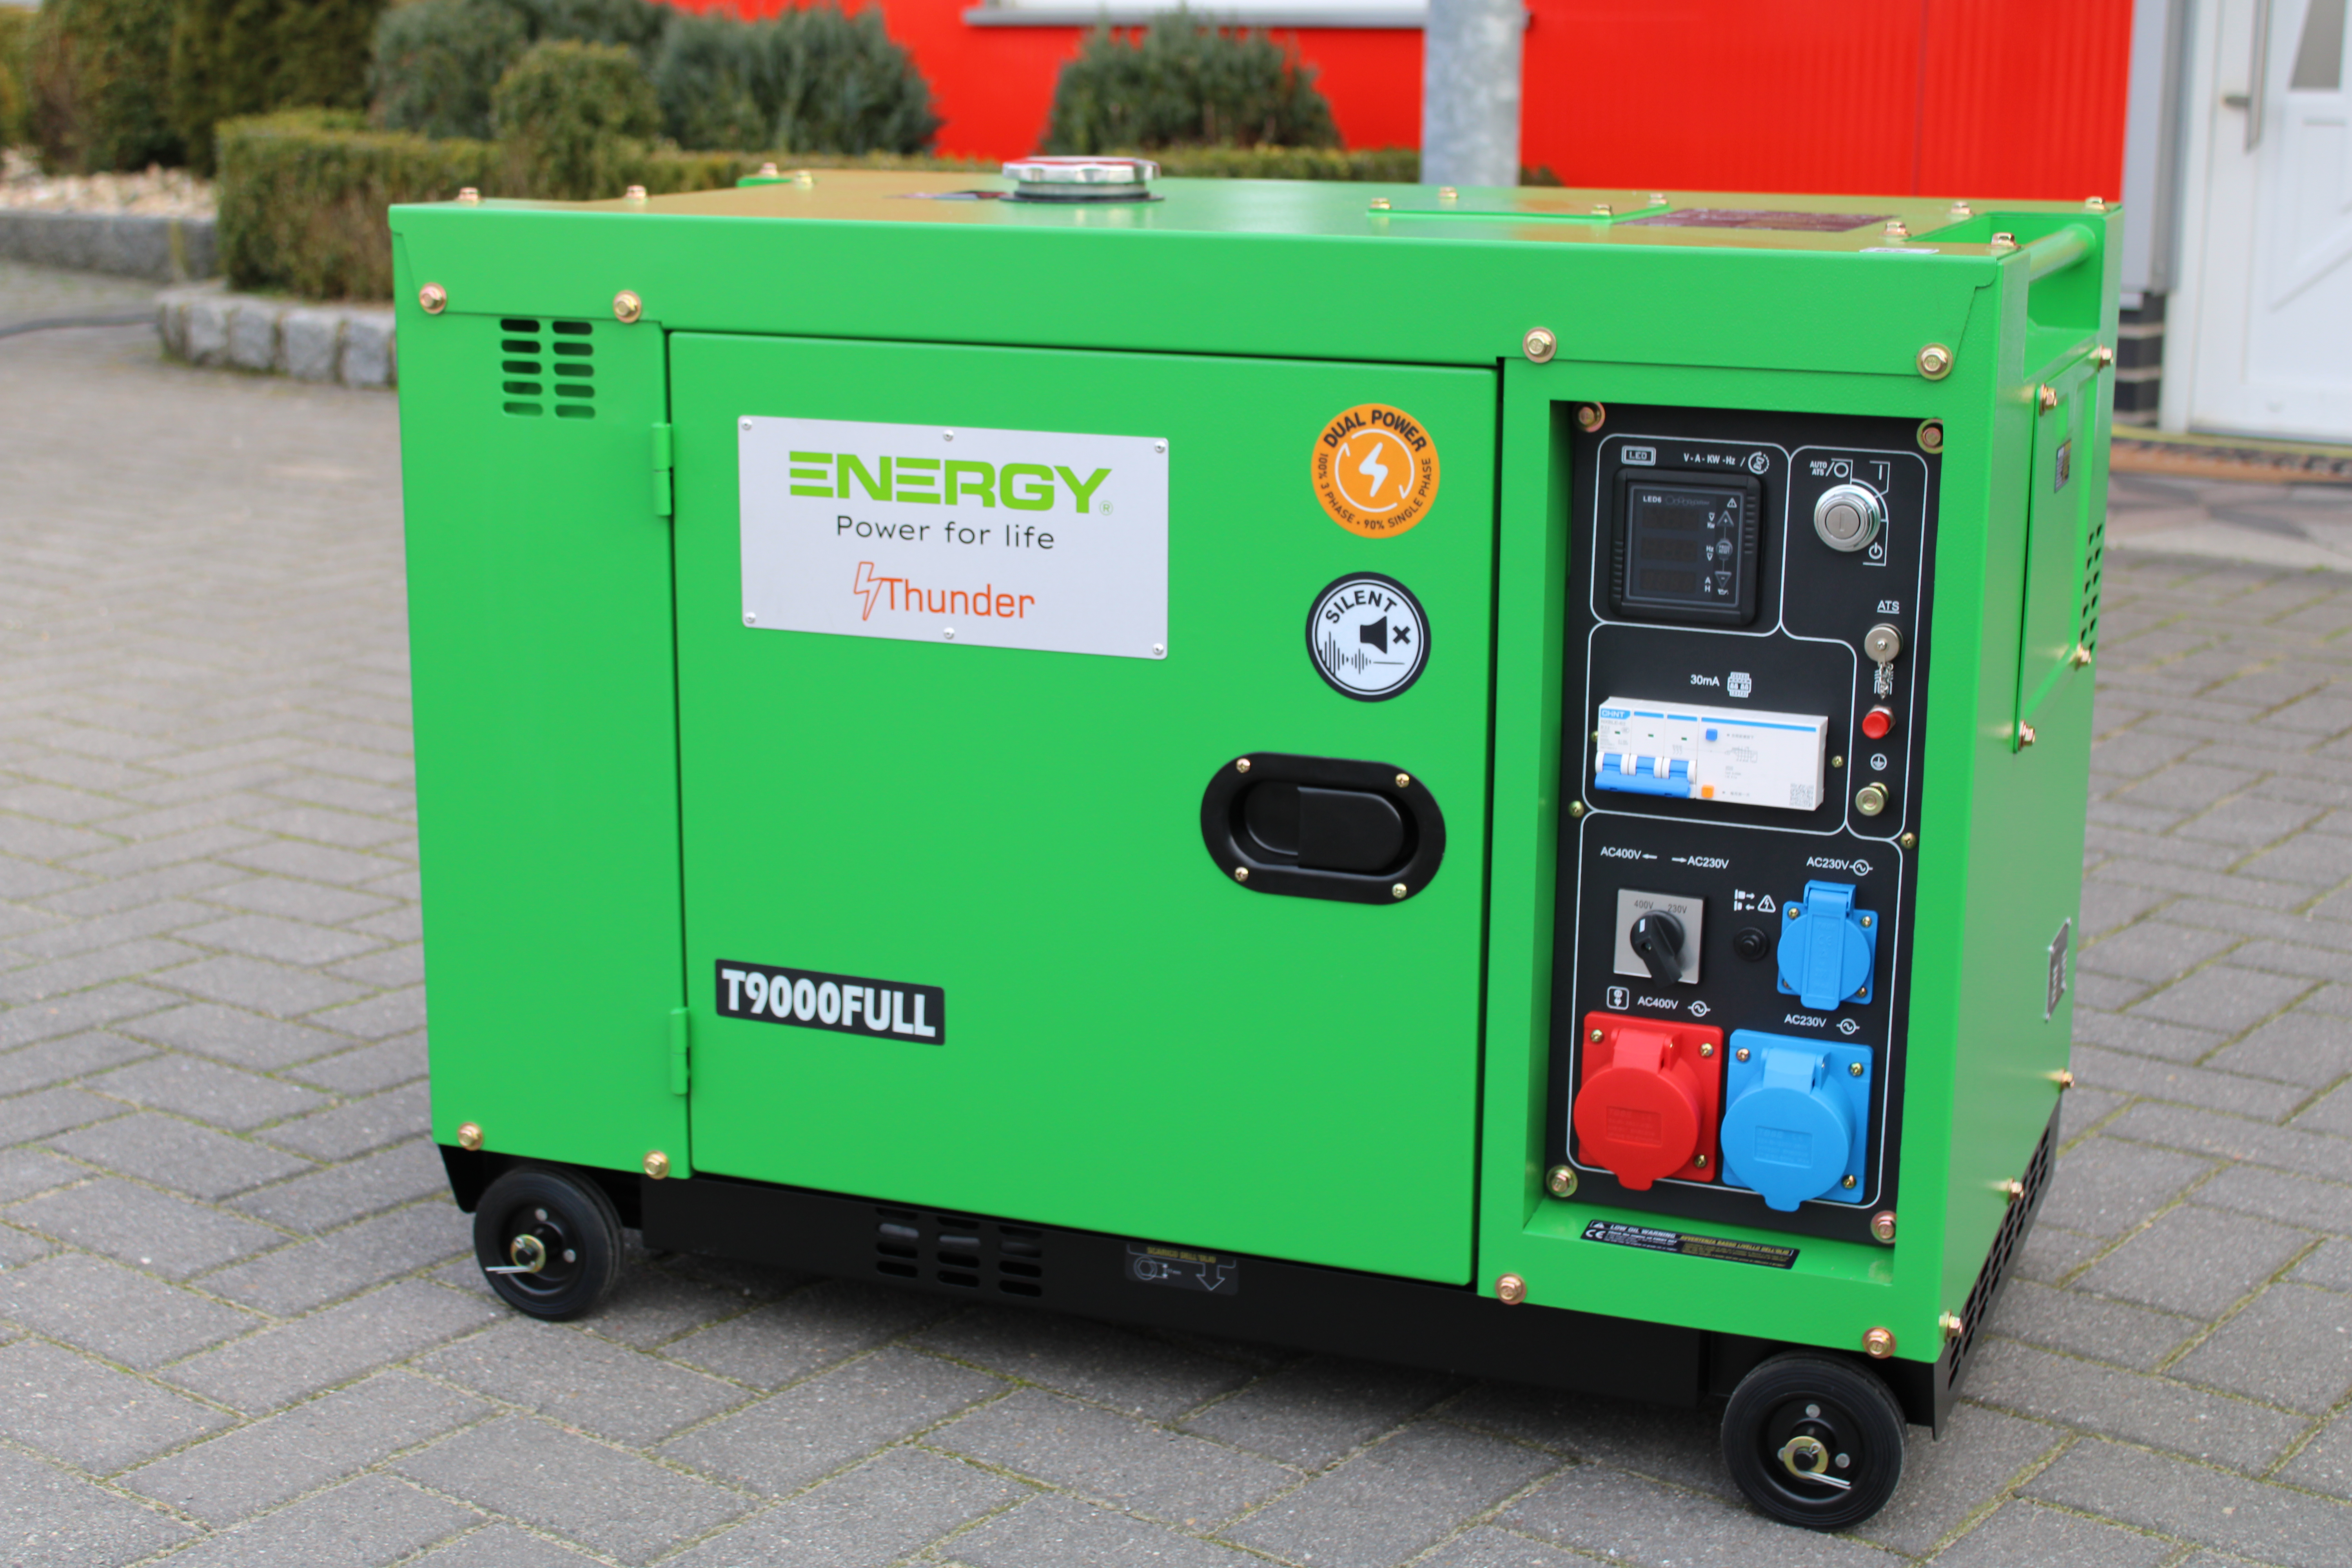 Stromgenerator von ENERGY, 9 kVA Diesel Generator mit 230 V & 400 V, T9000FULL